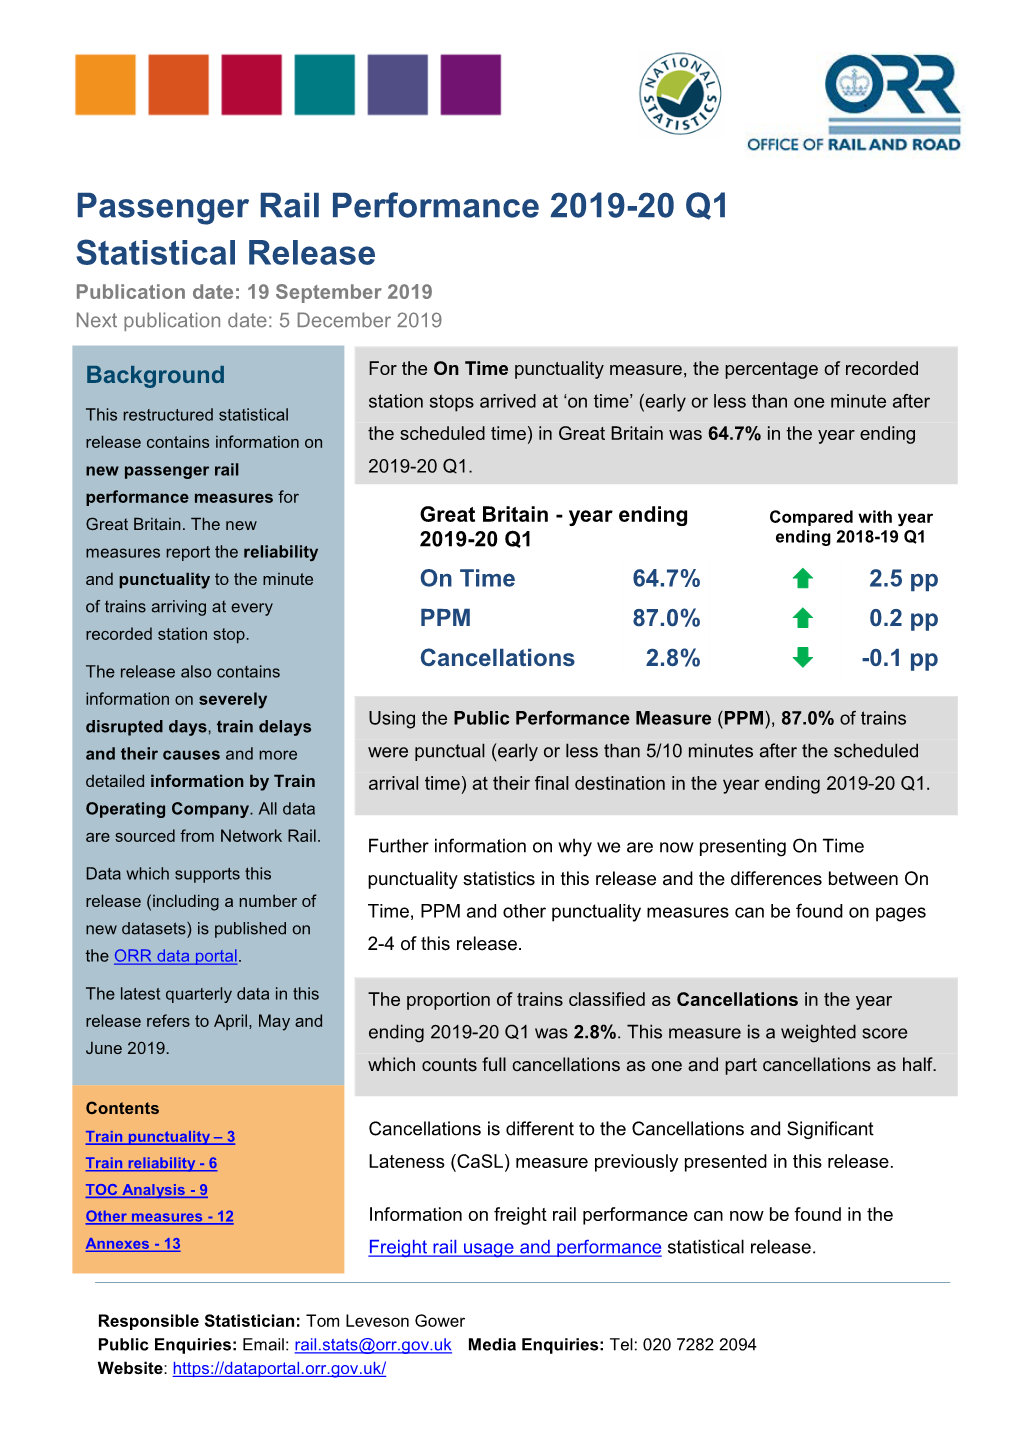 Passenger Rail Performance 2019-20 Q1 Statistical Release Publication Date: 19 September 2019 Next Publication Date: 5 December 2019